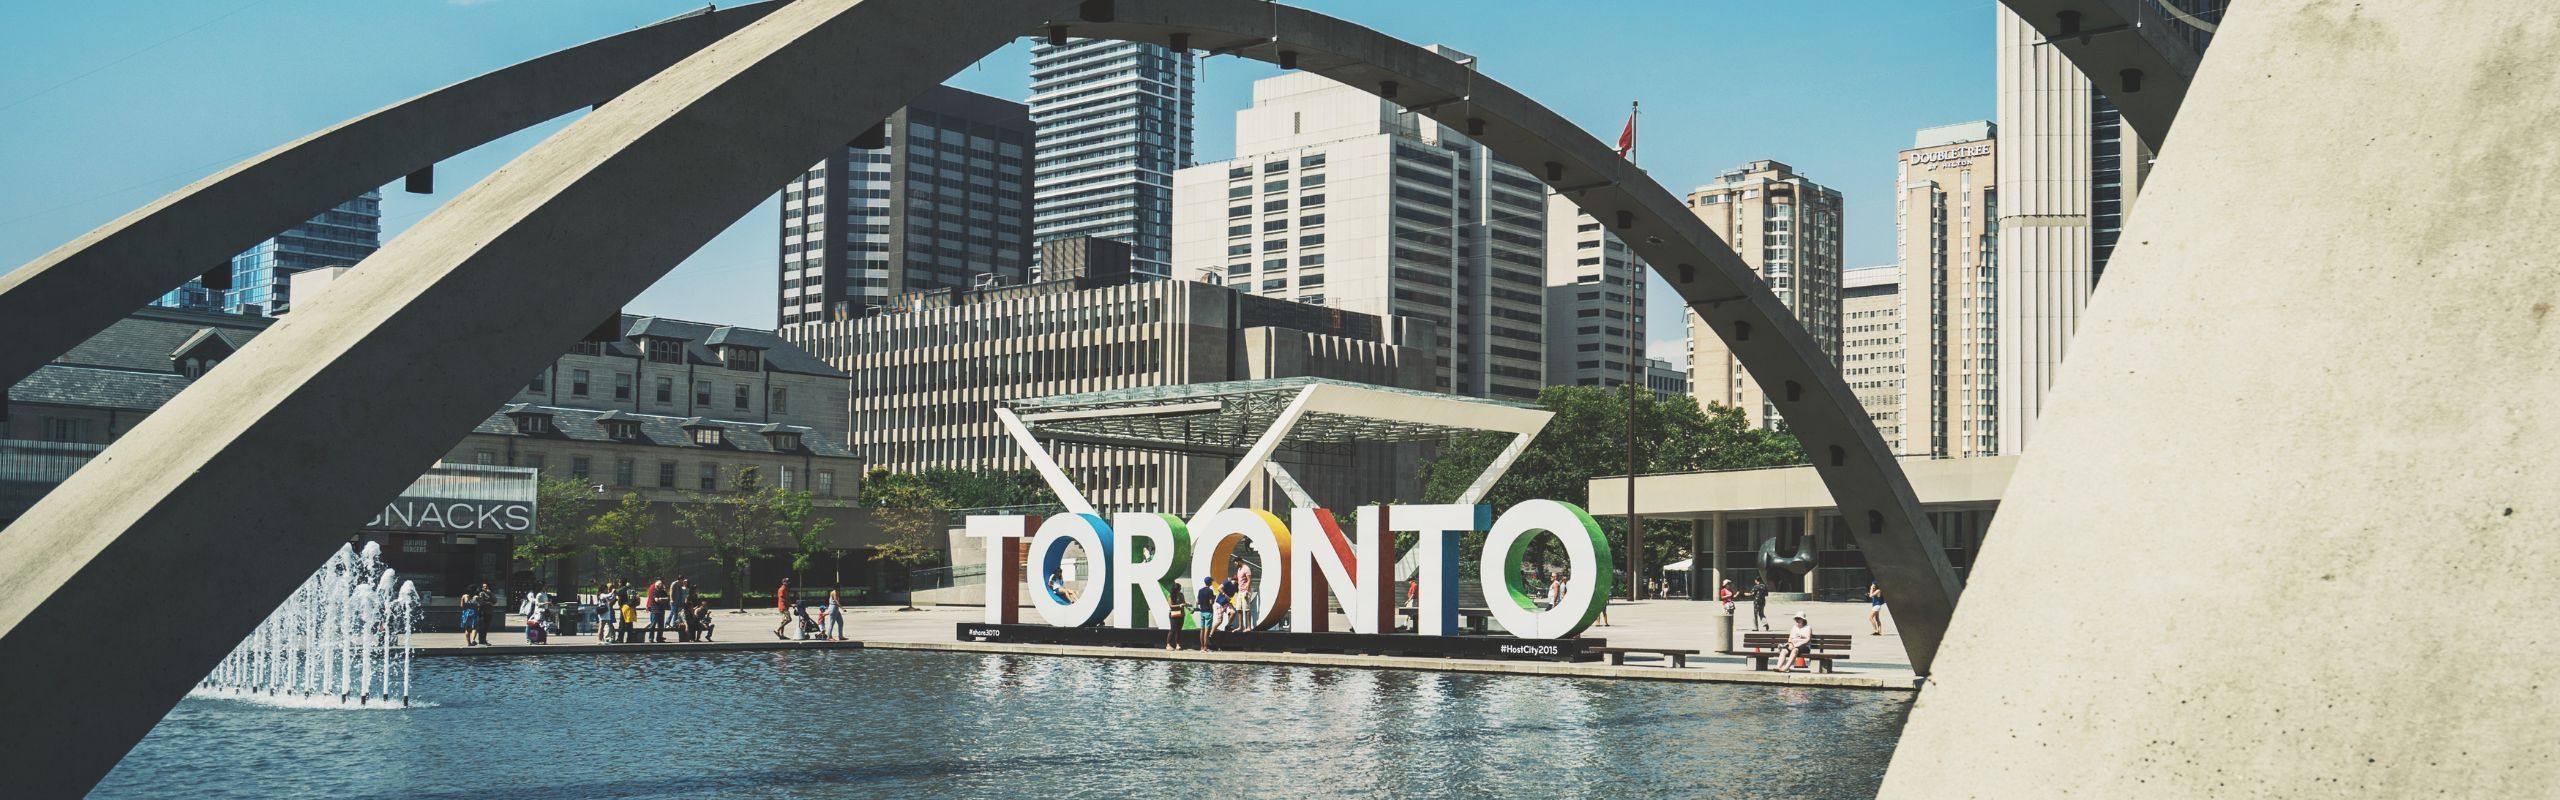 Image of Toronto landmark